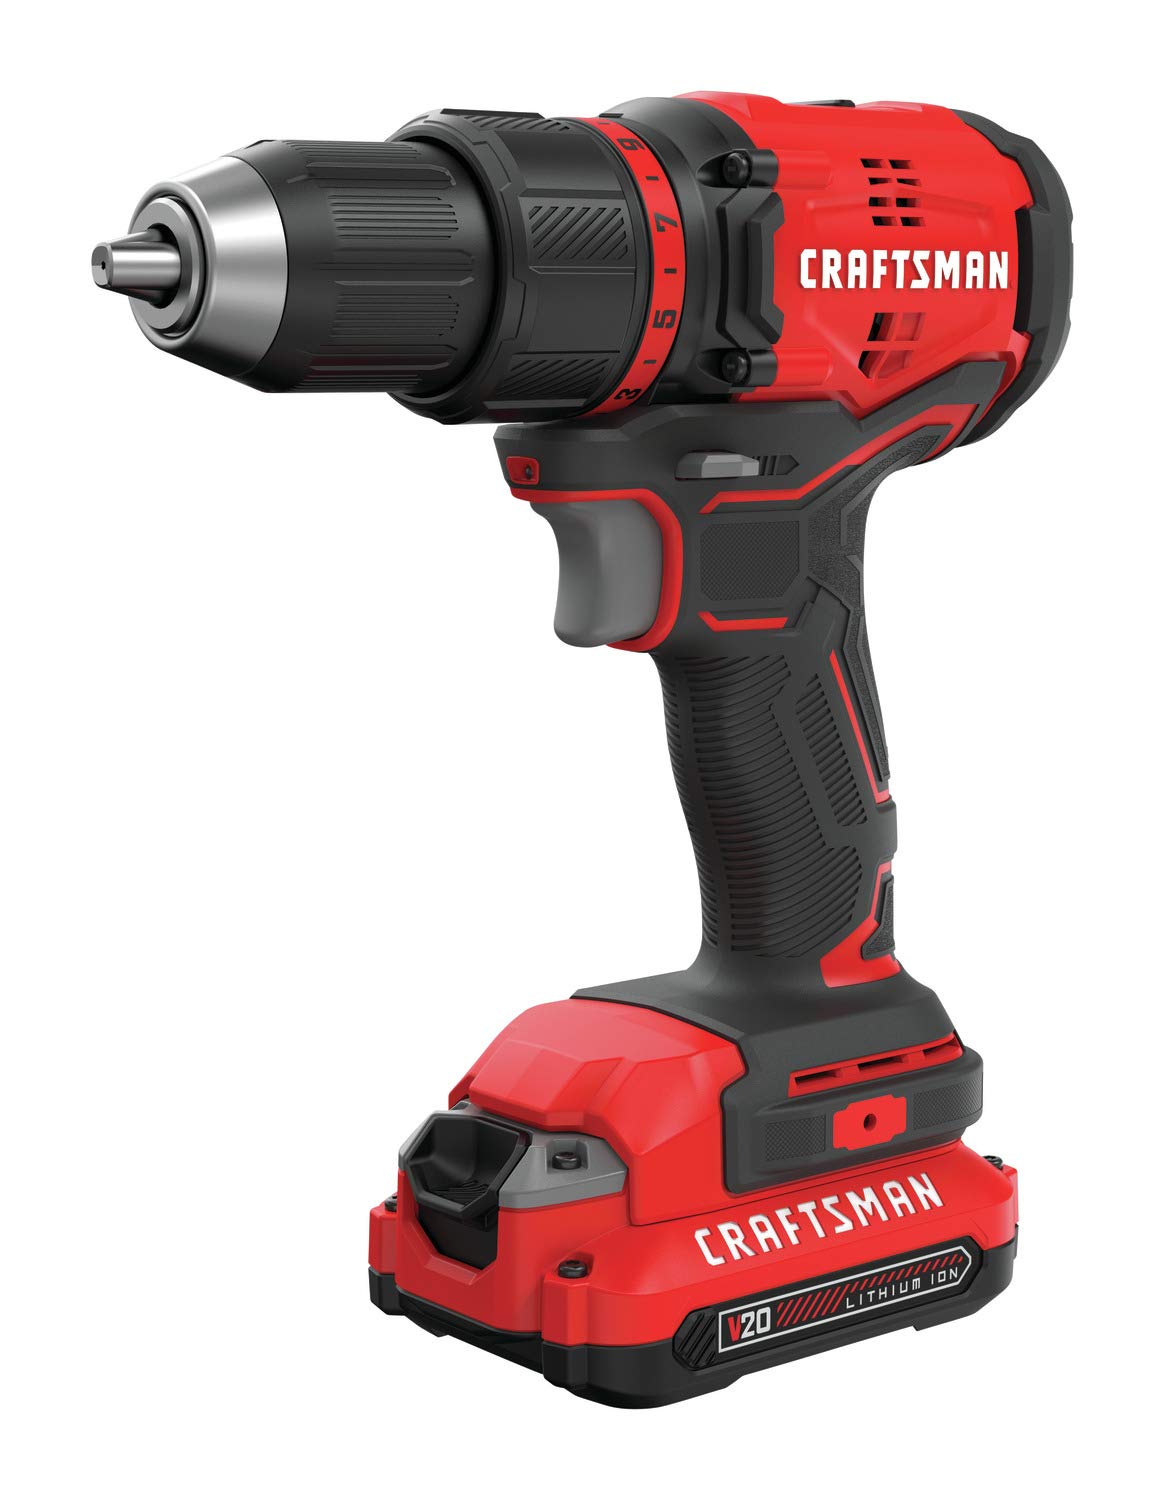 CRAFTSMAN V20 Cordless DrillDriver Kit Brushless CMCD710C1 Red 12-in.並行輸入品